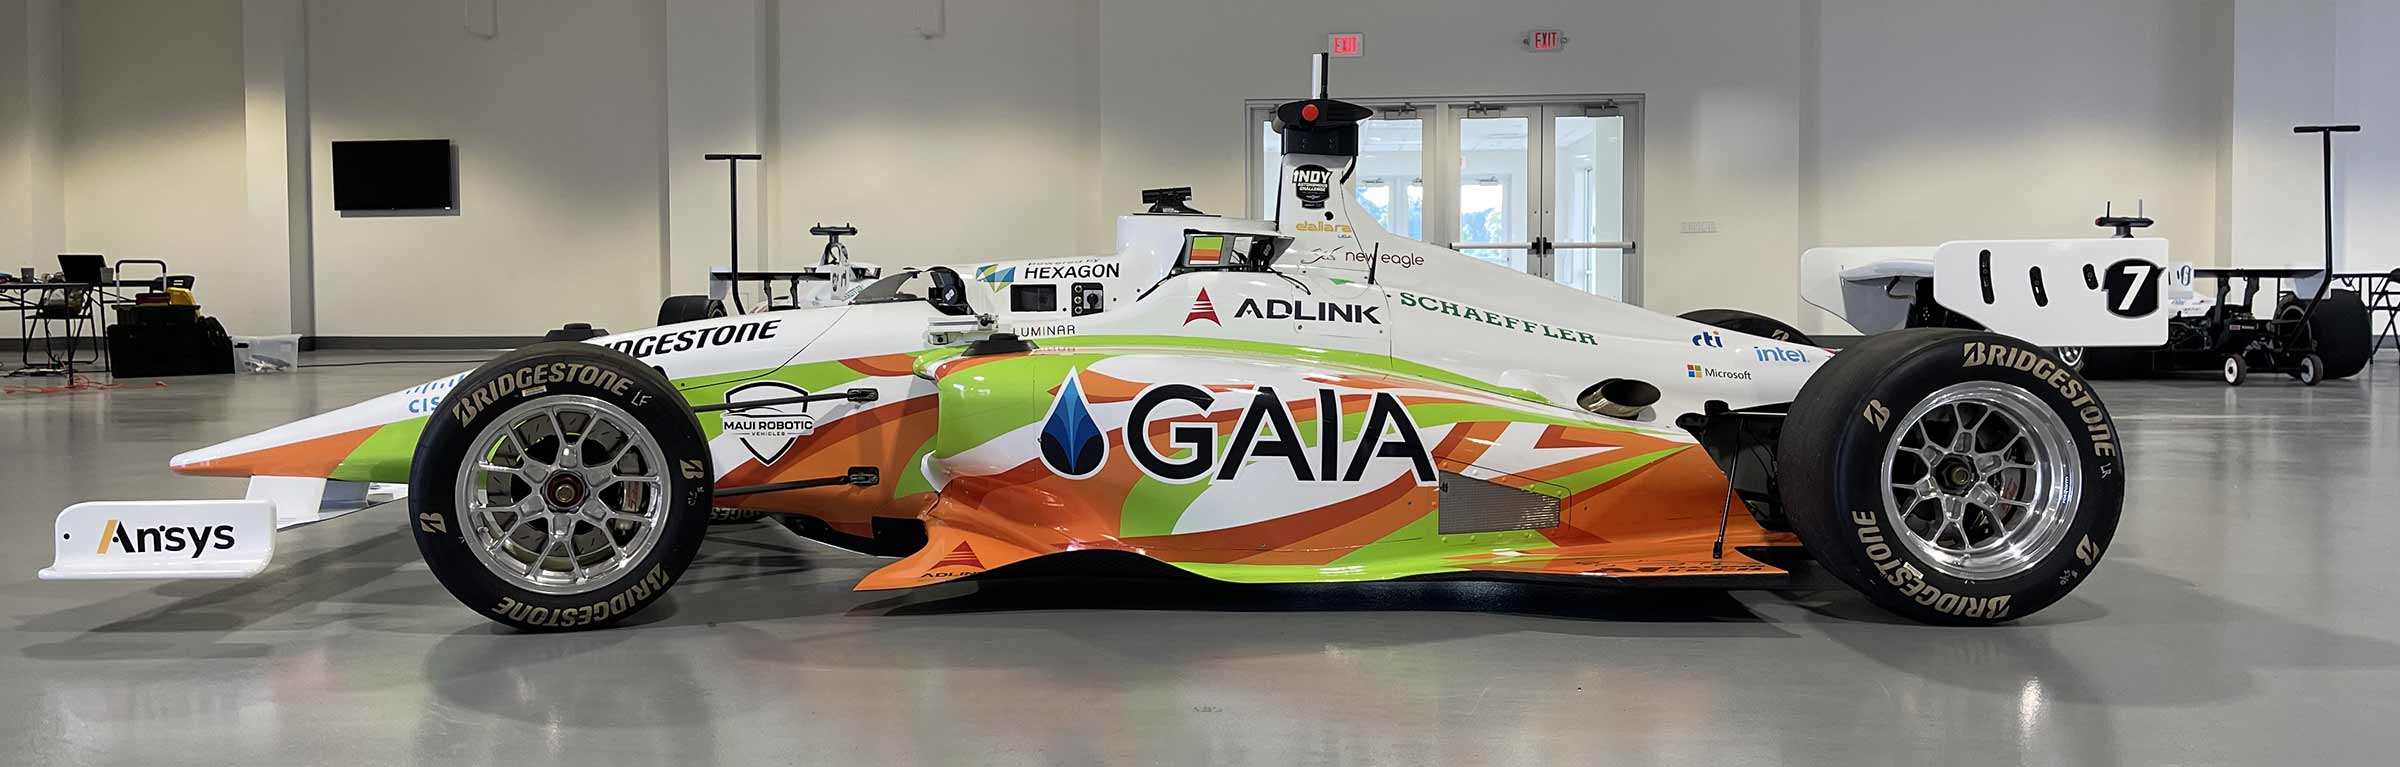 transformed Dallara AV-21 race car into an autonomous vehicle.